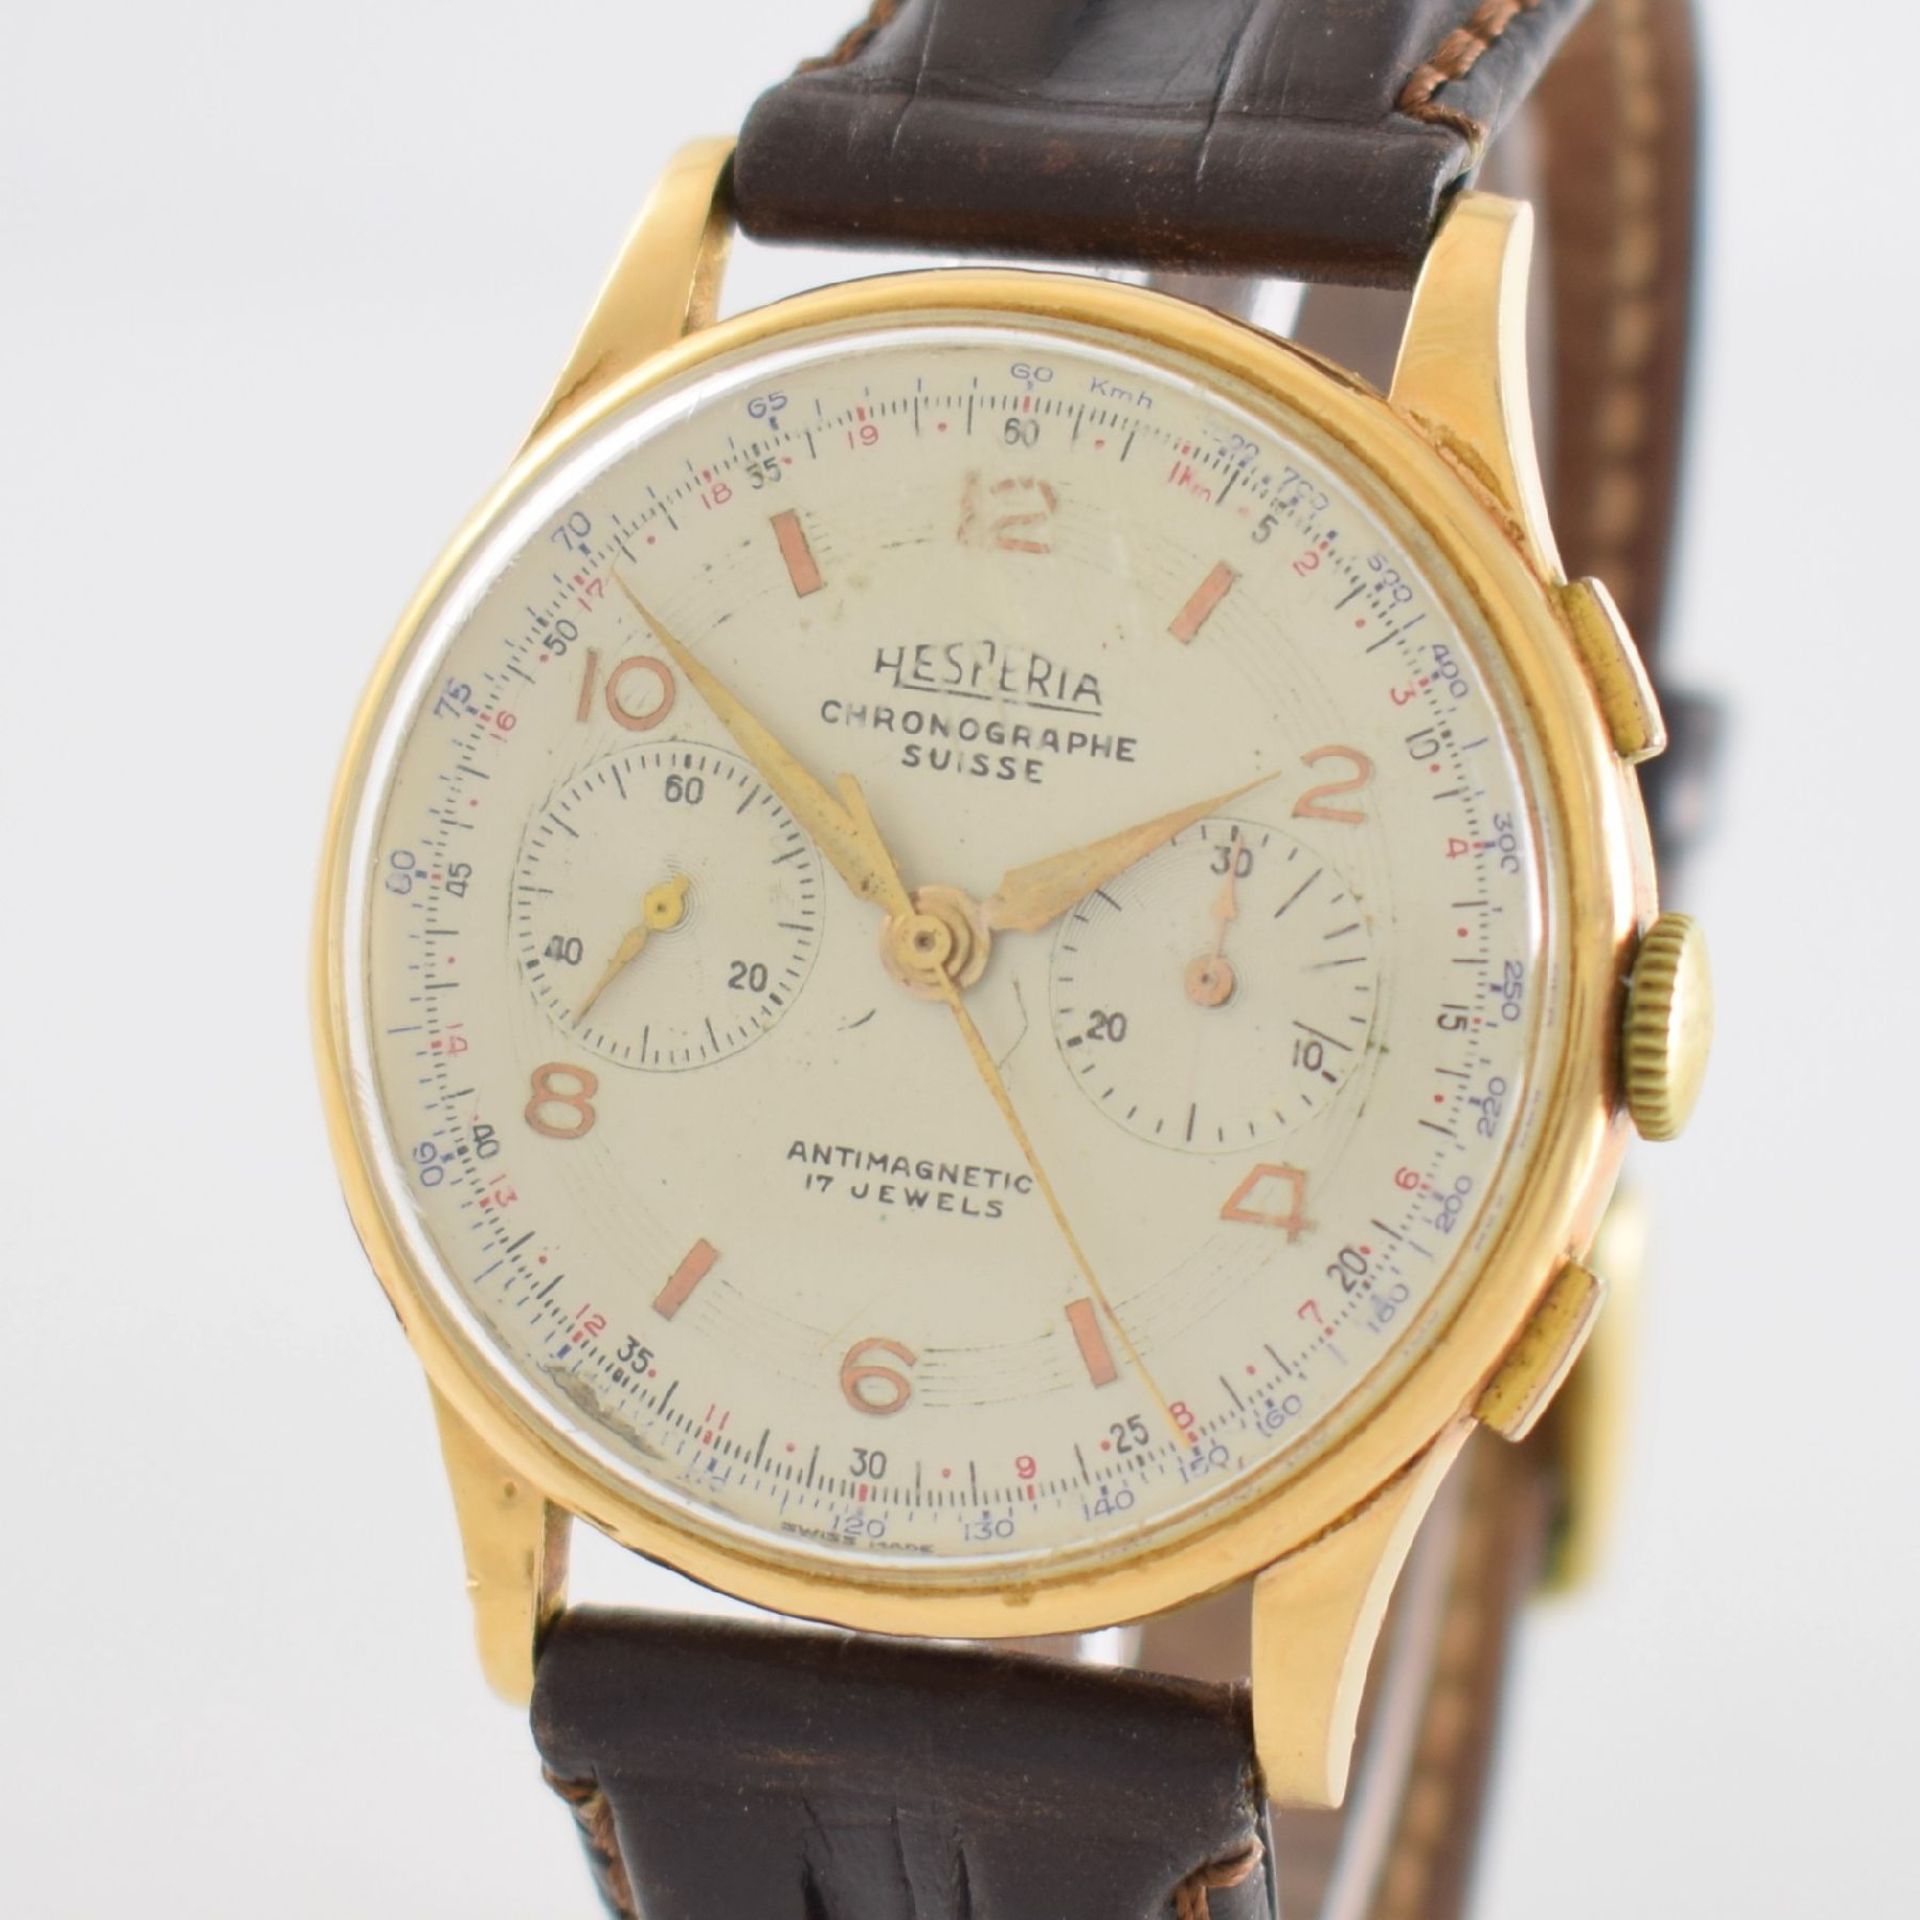 HESPERIA/CHRONOGRAPHE SUISSE Armbandchronograph in RoseG 585/000, Handaufzug, Schweiz um 1945, 3- - Bild 4 aus 10